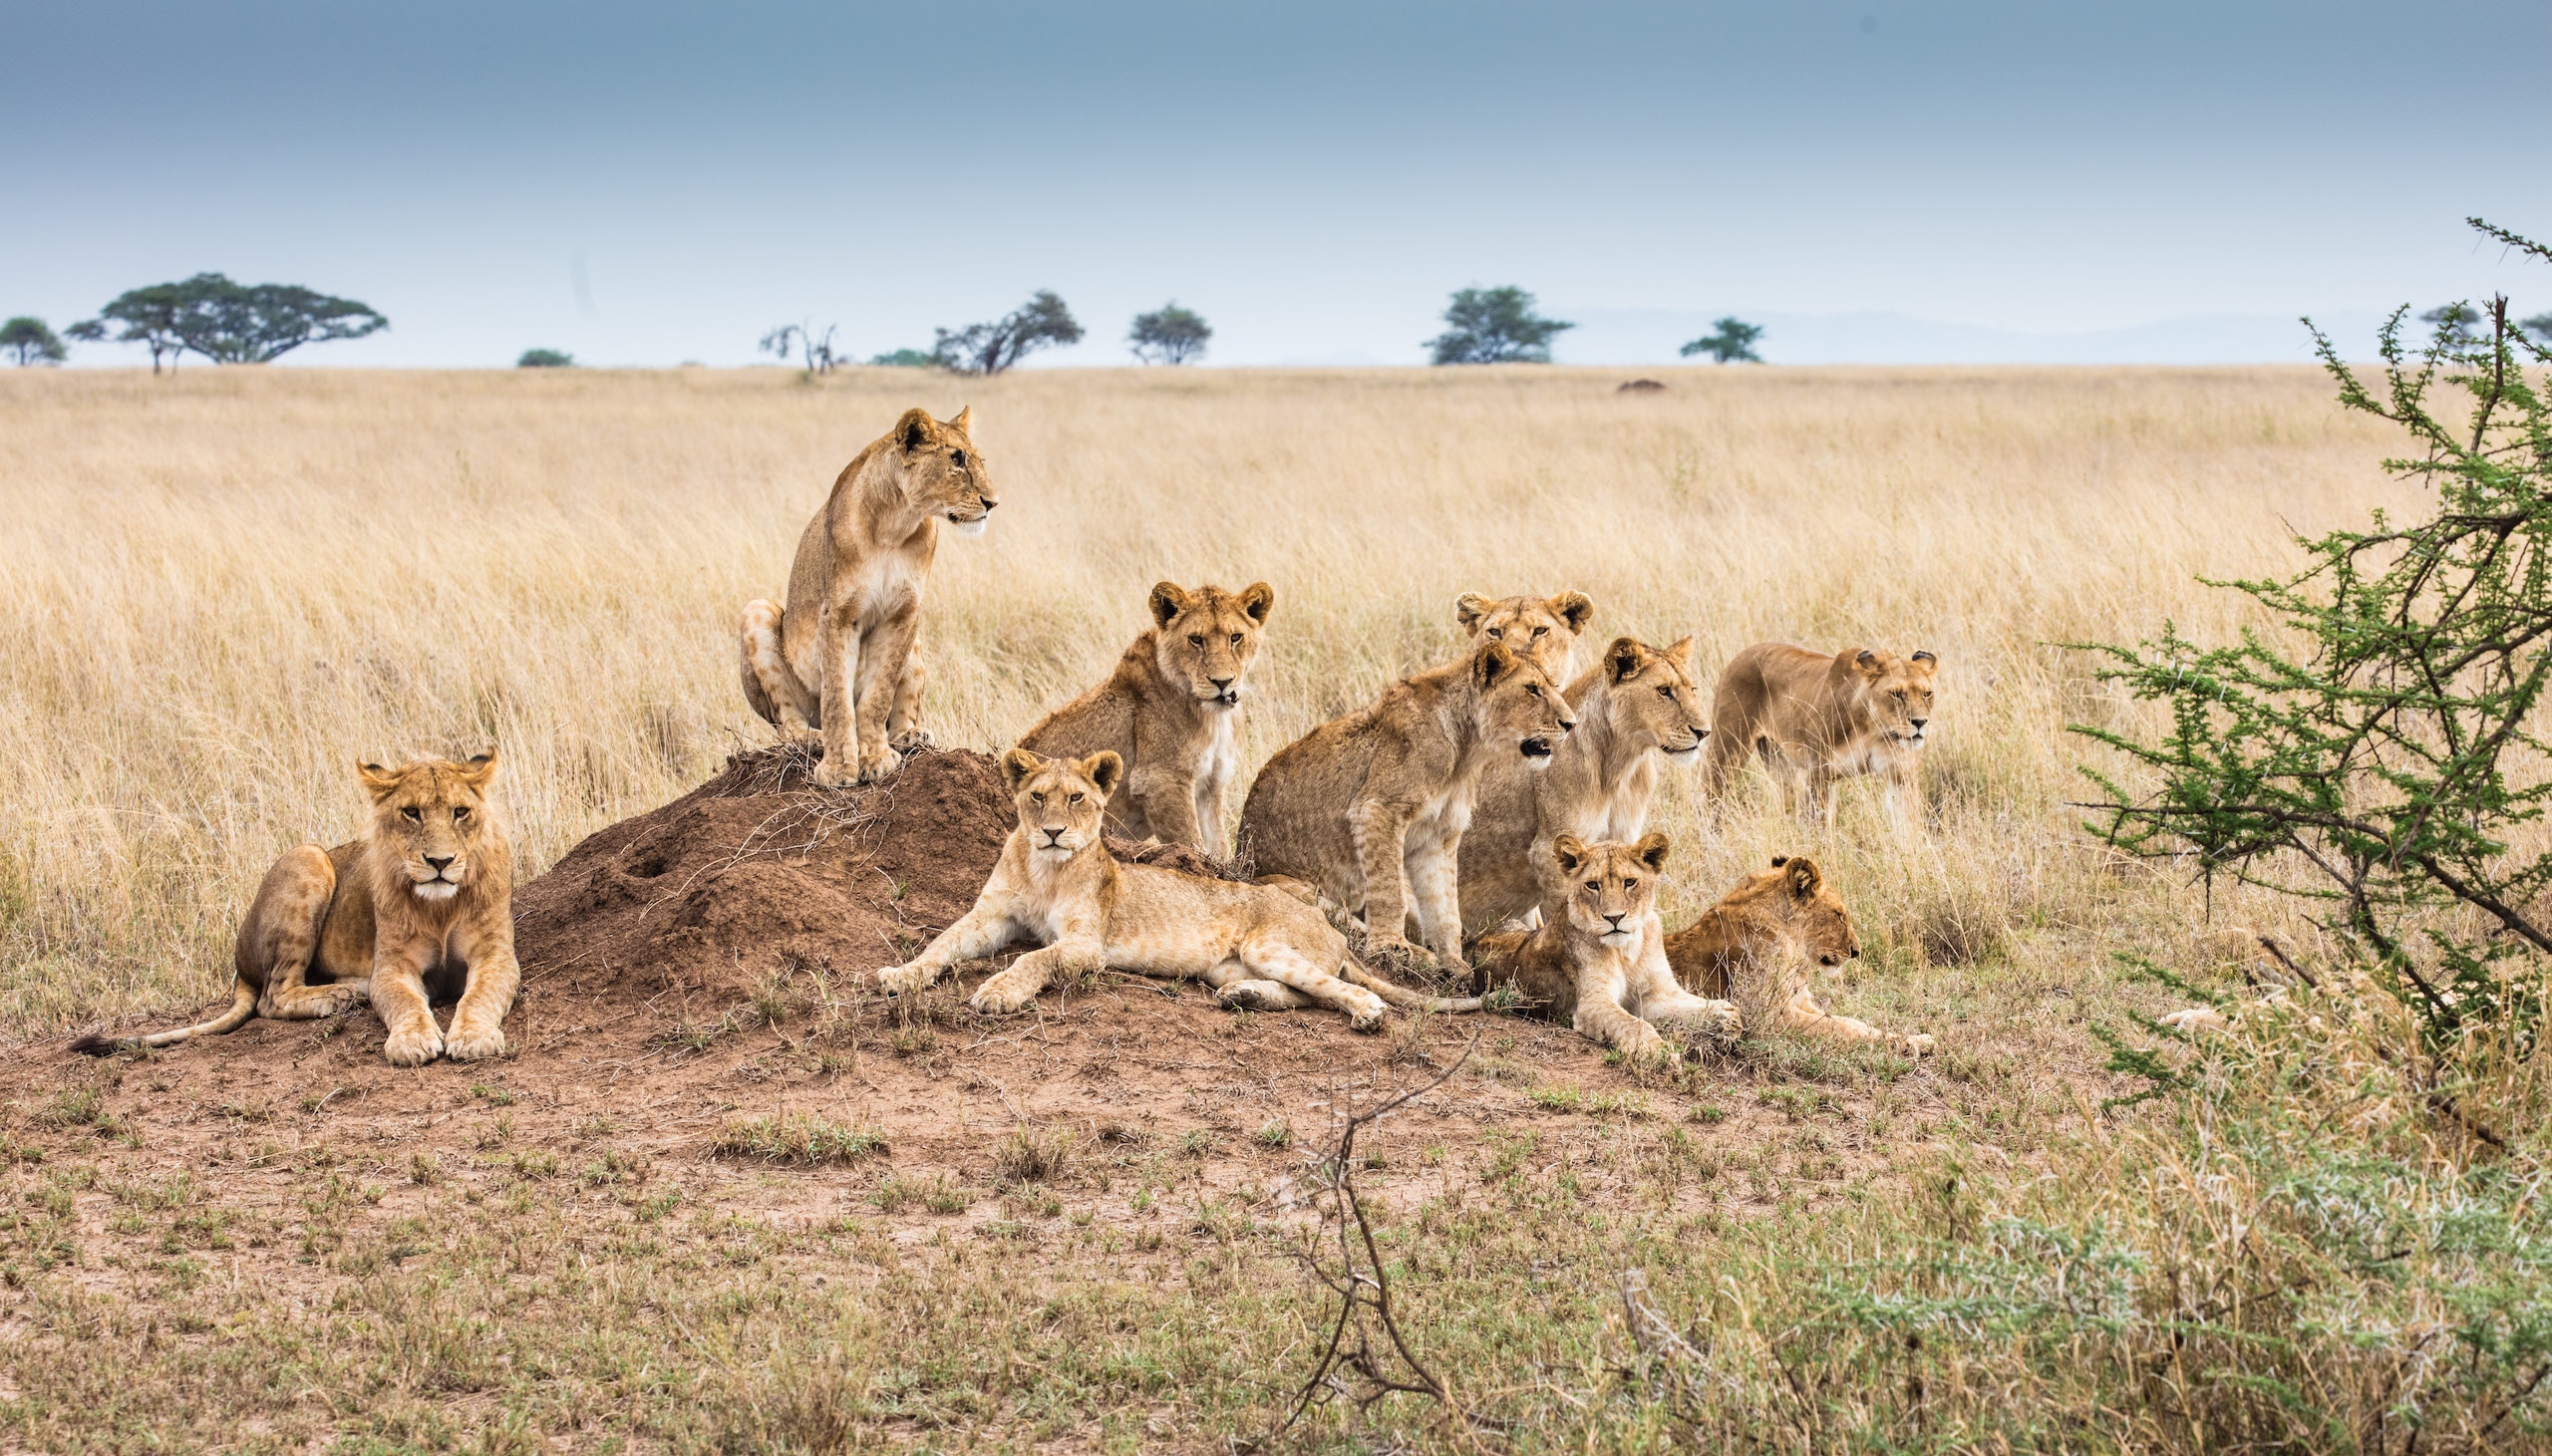   Ngorongoro Crater & Serengeti National Park